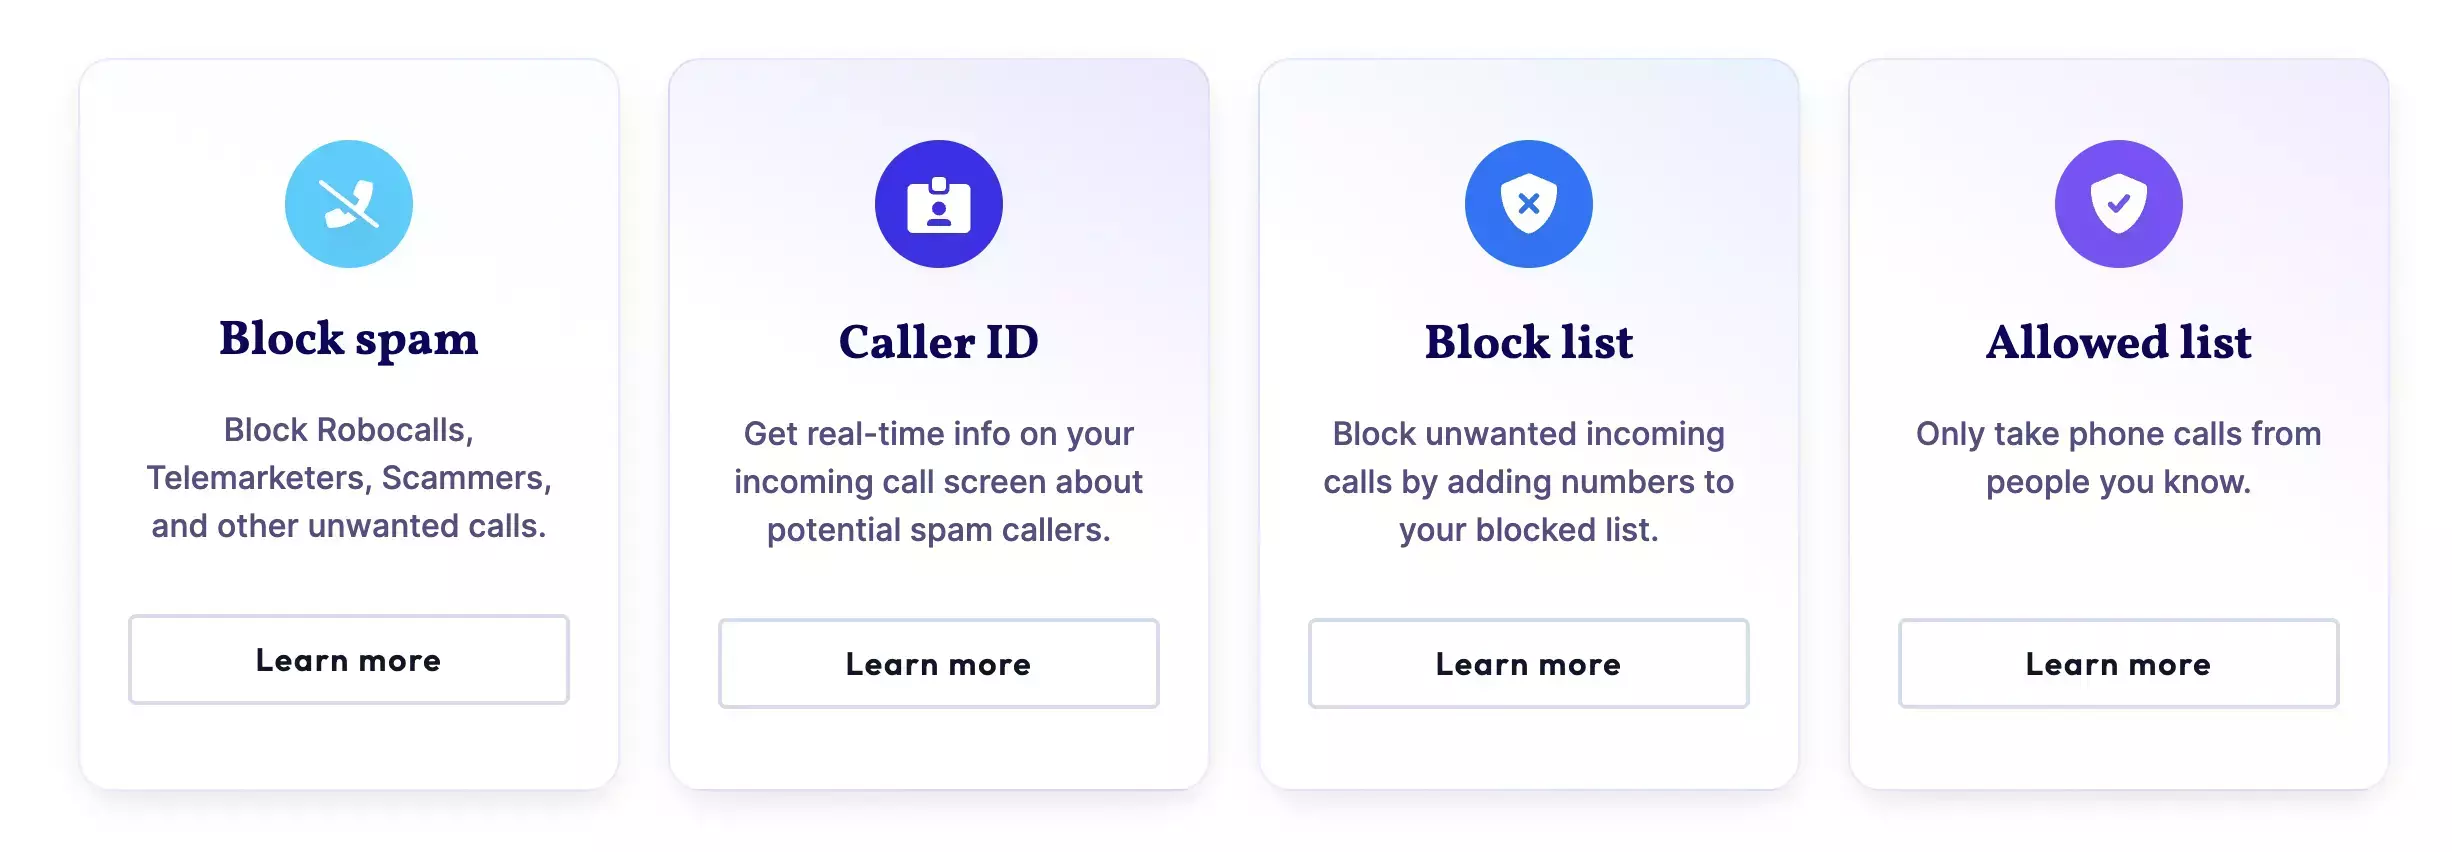 Image of Community Phone spam blocker services